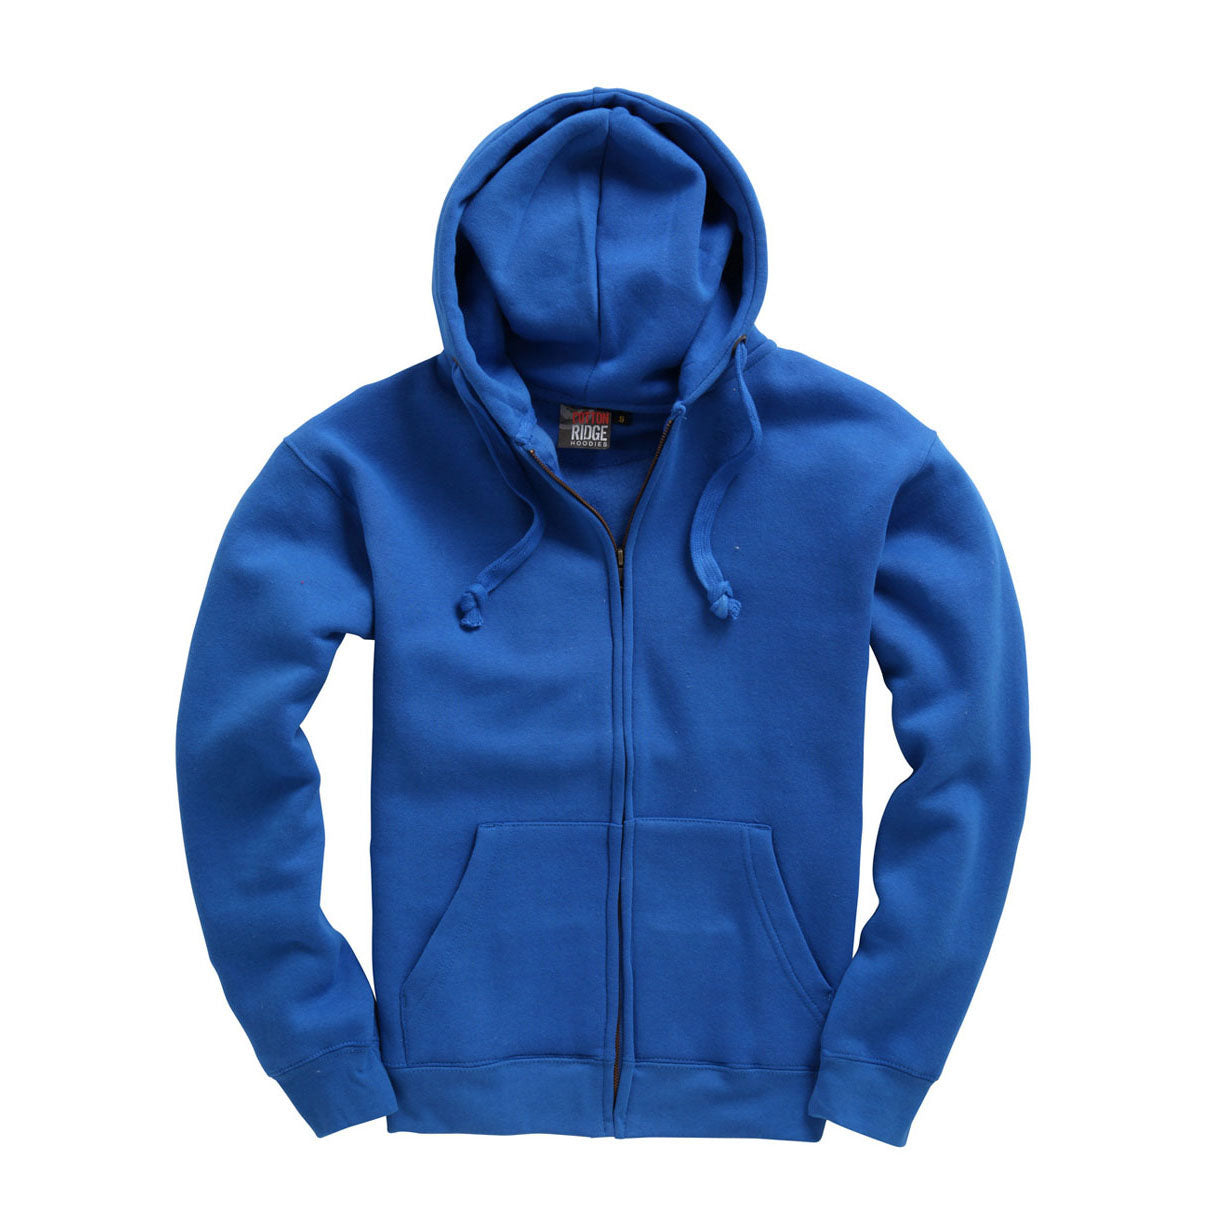 W88 premium zipped hoodie